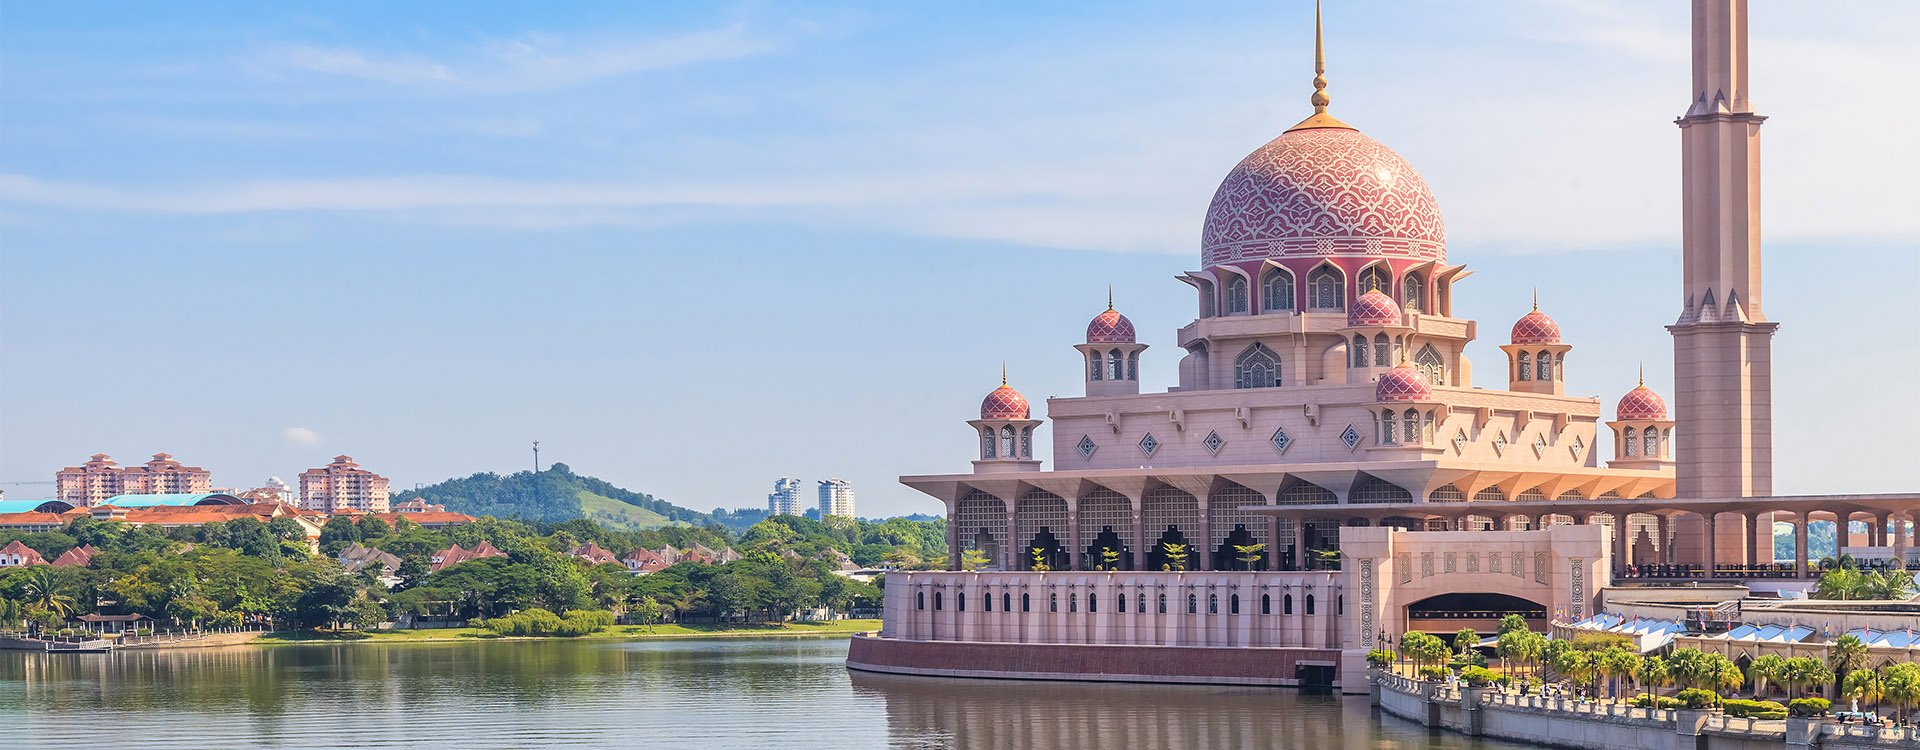 View of  pink Putra Mosque (Masjid Putra) in Putrajaya, Malaysia